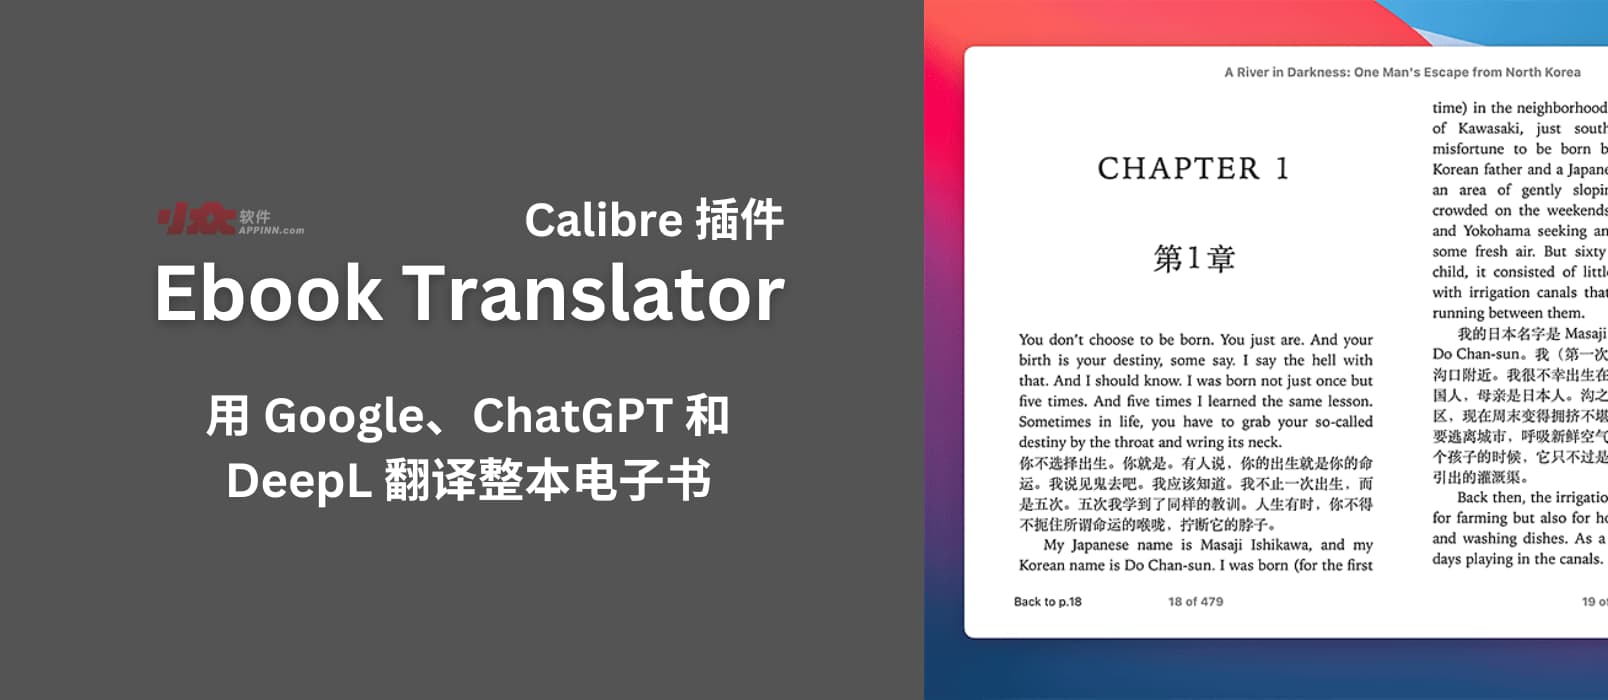 Ebook Translator - 用 Google、ChatGPT 和 DeepL 翻译整本电子书[Calibre 插件]